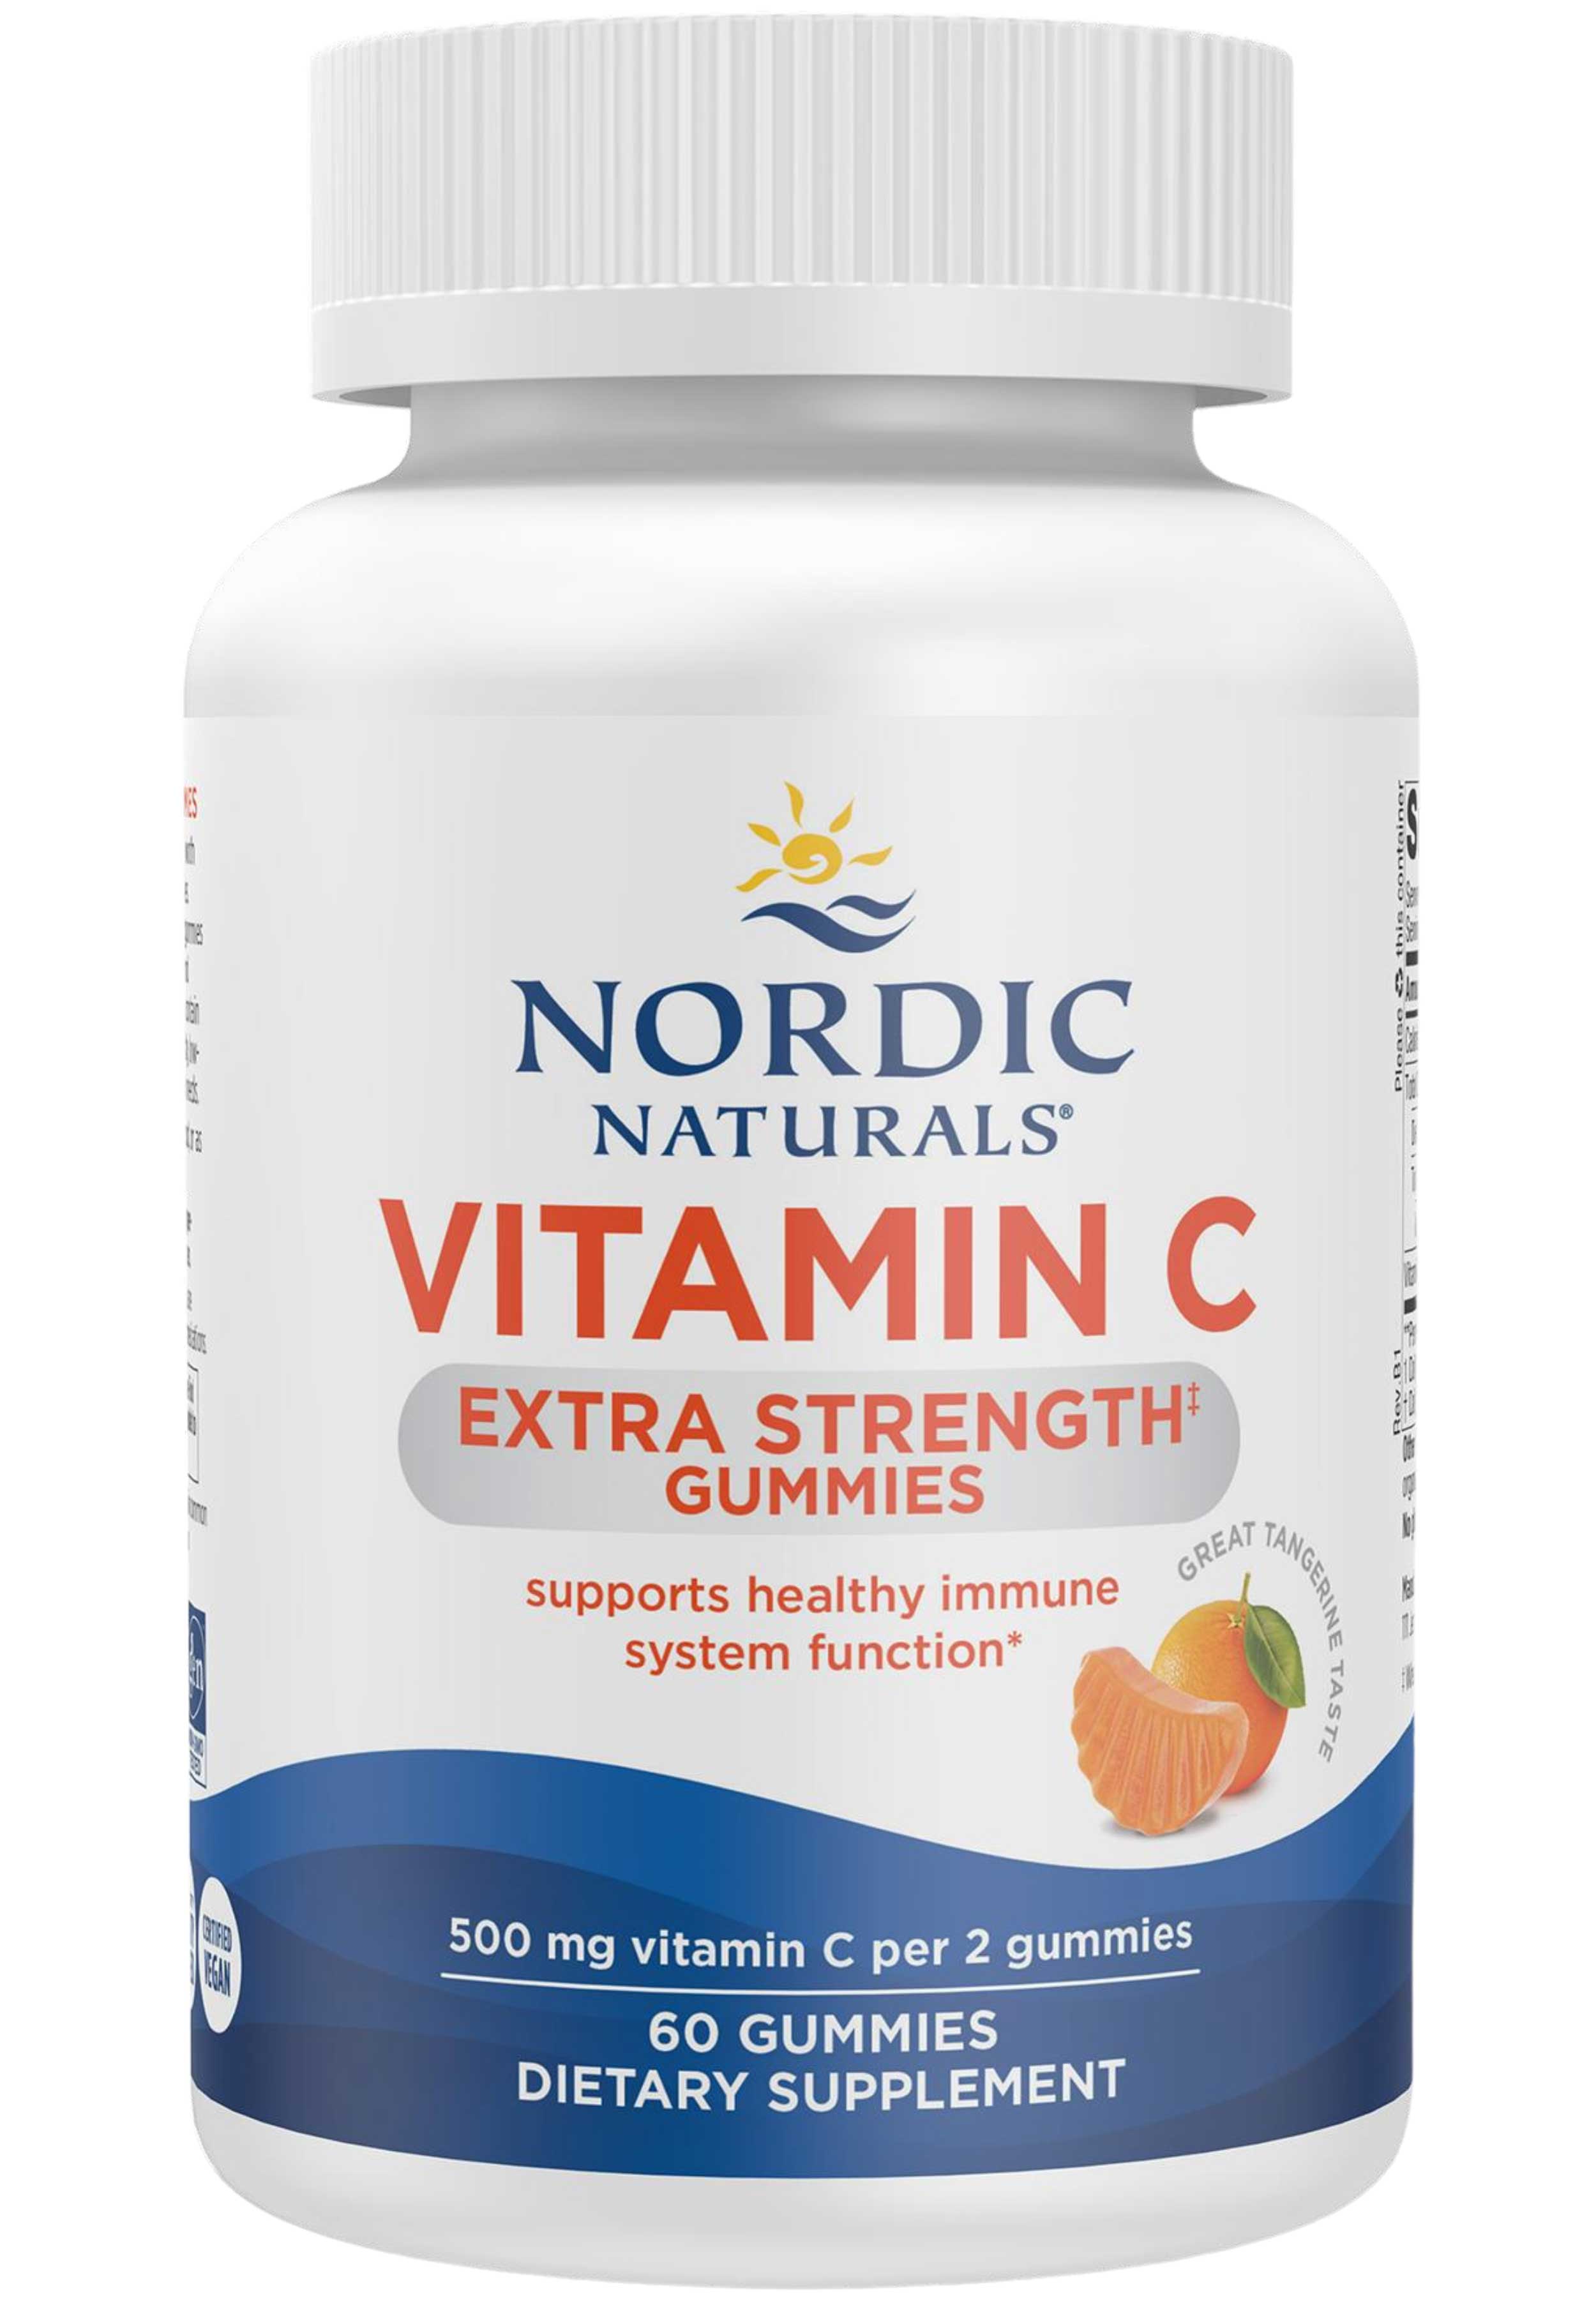 Nordic Naturals Vitamin C Extra Strength Gummies